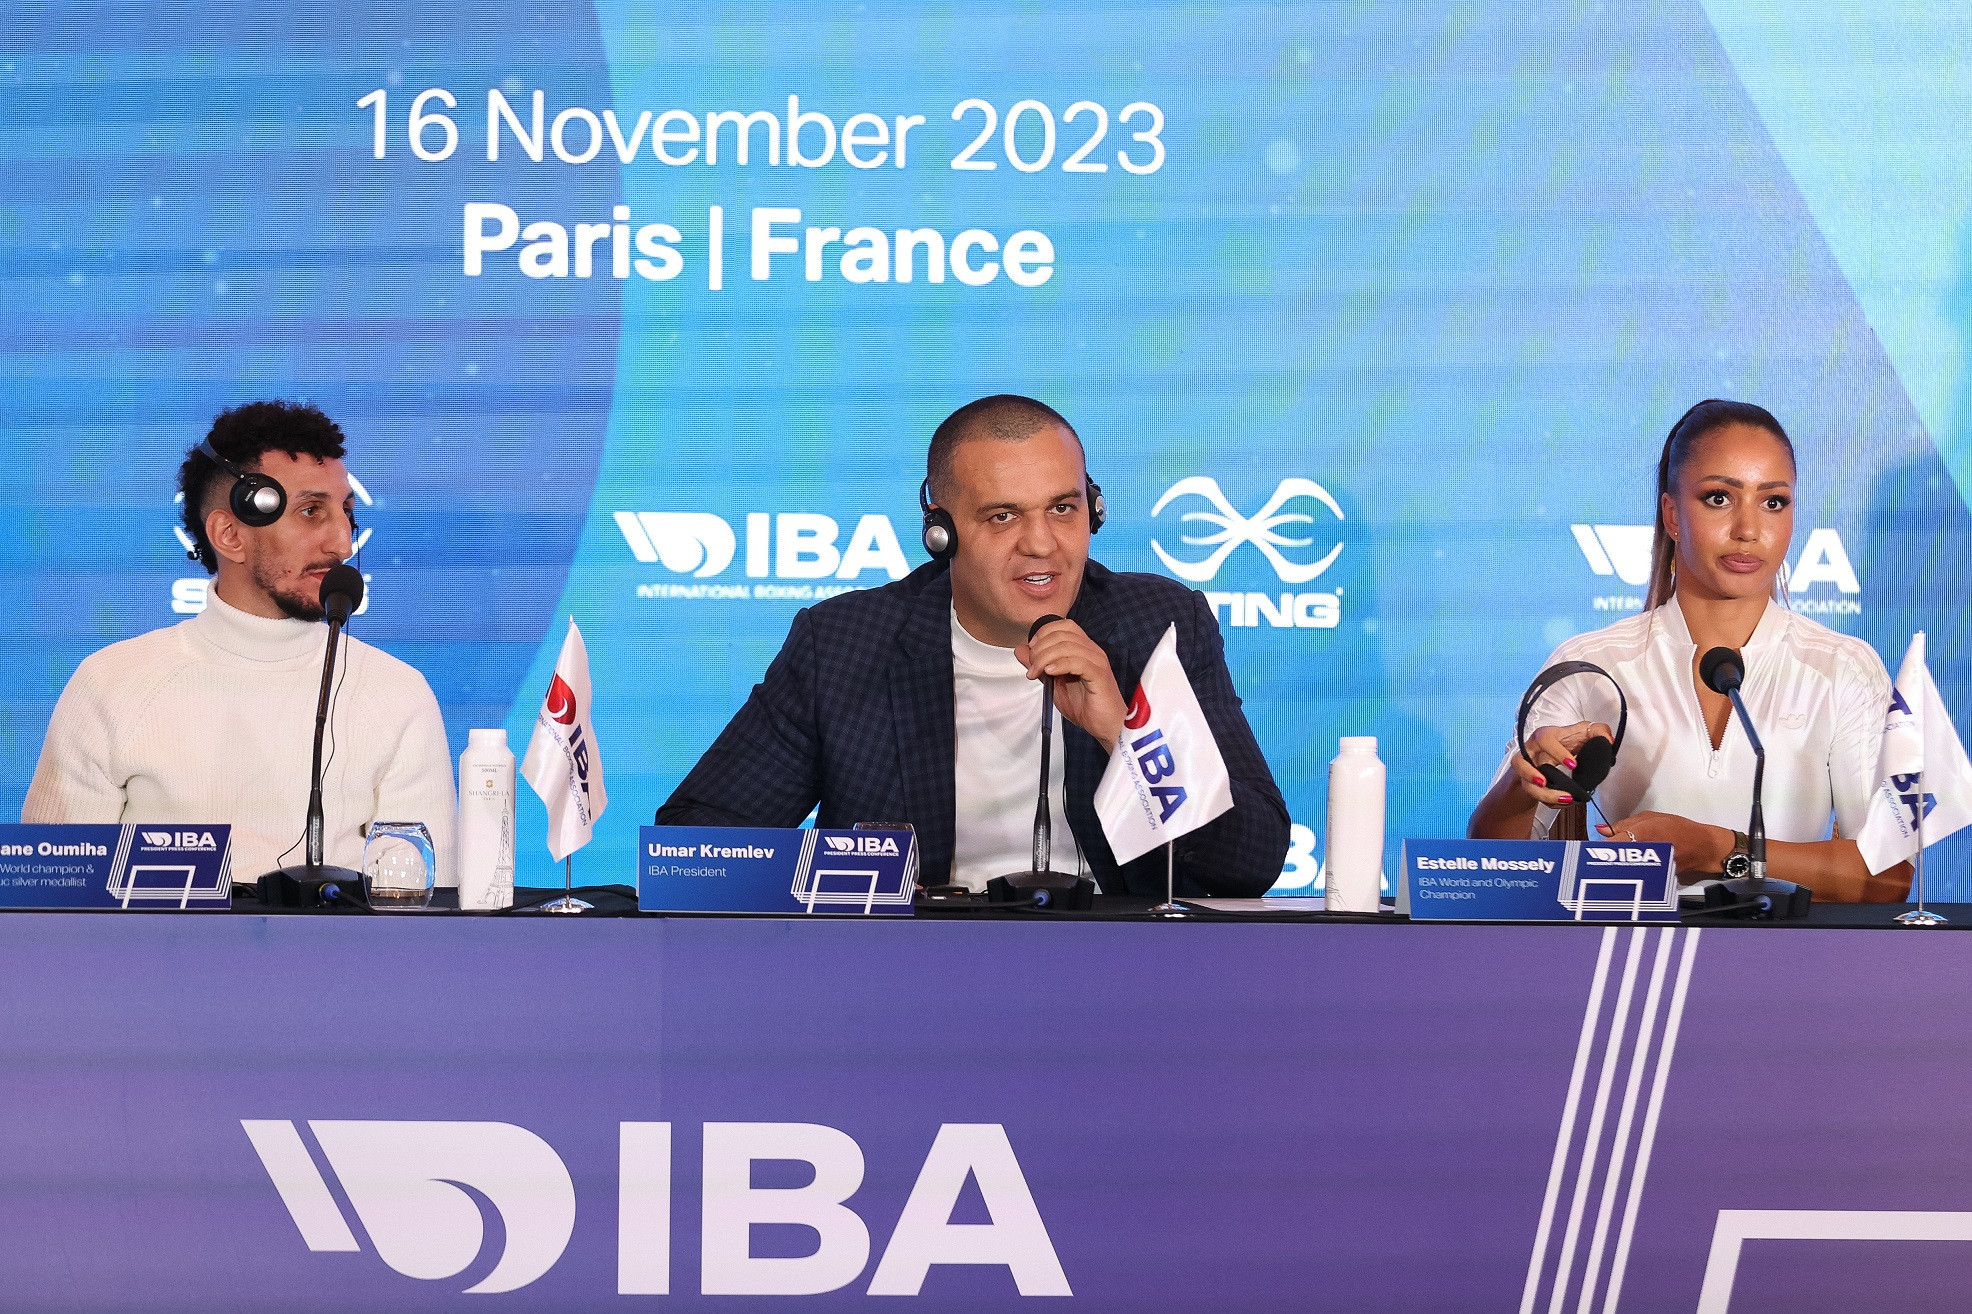 IBA President Umar Kremlev at the press conference in Paris in December 2023. IBA